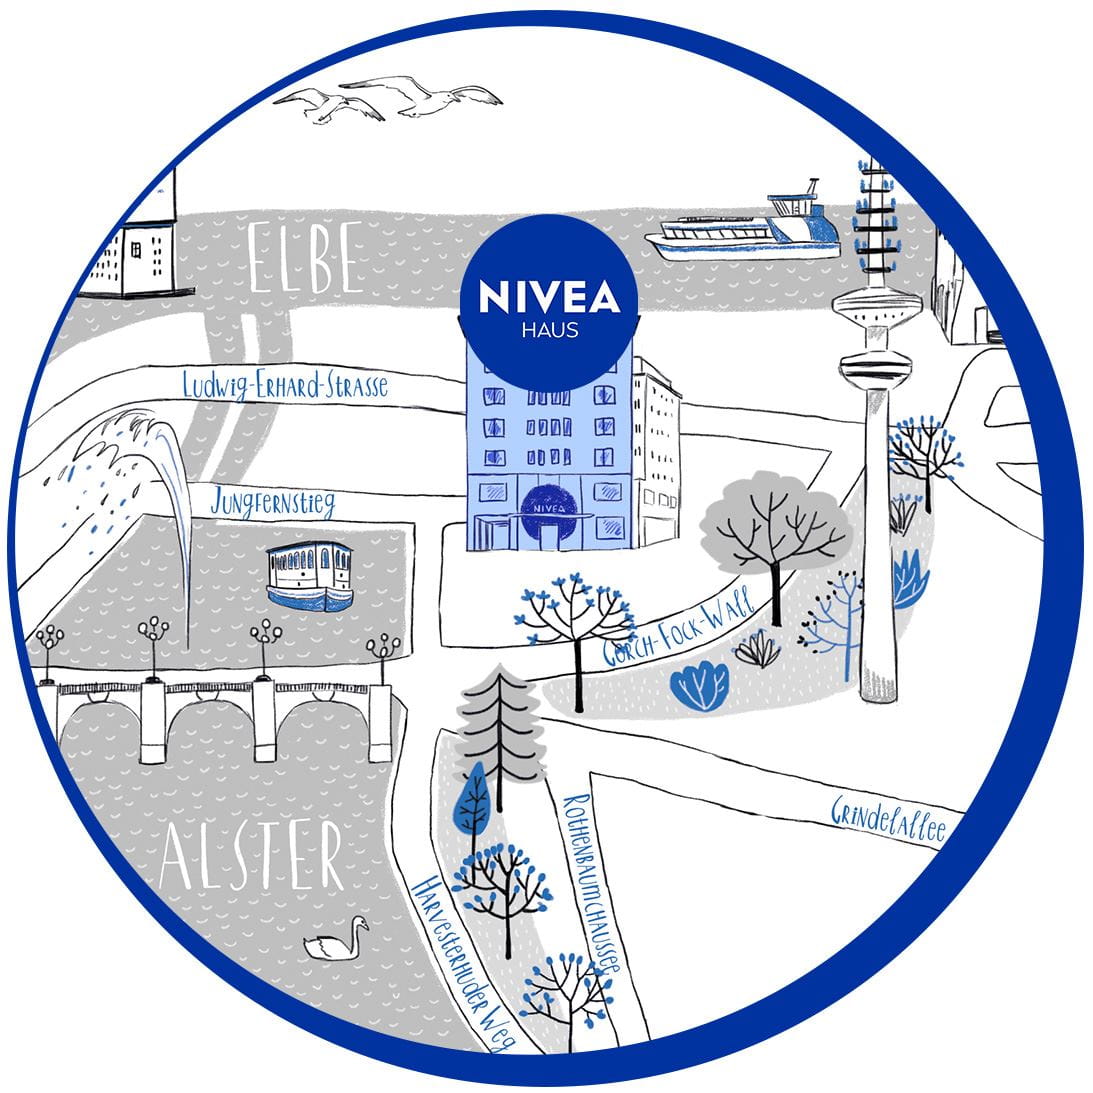 NIVEA Haus Standort Hamburg Karte